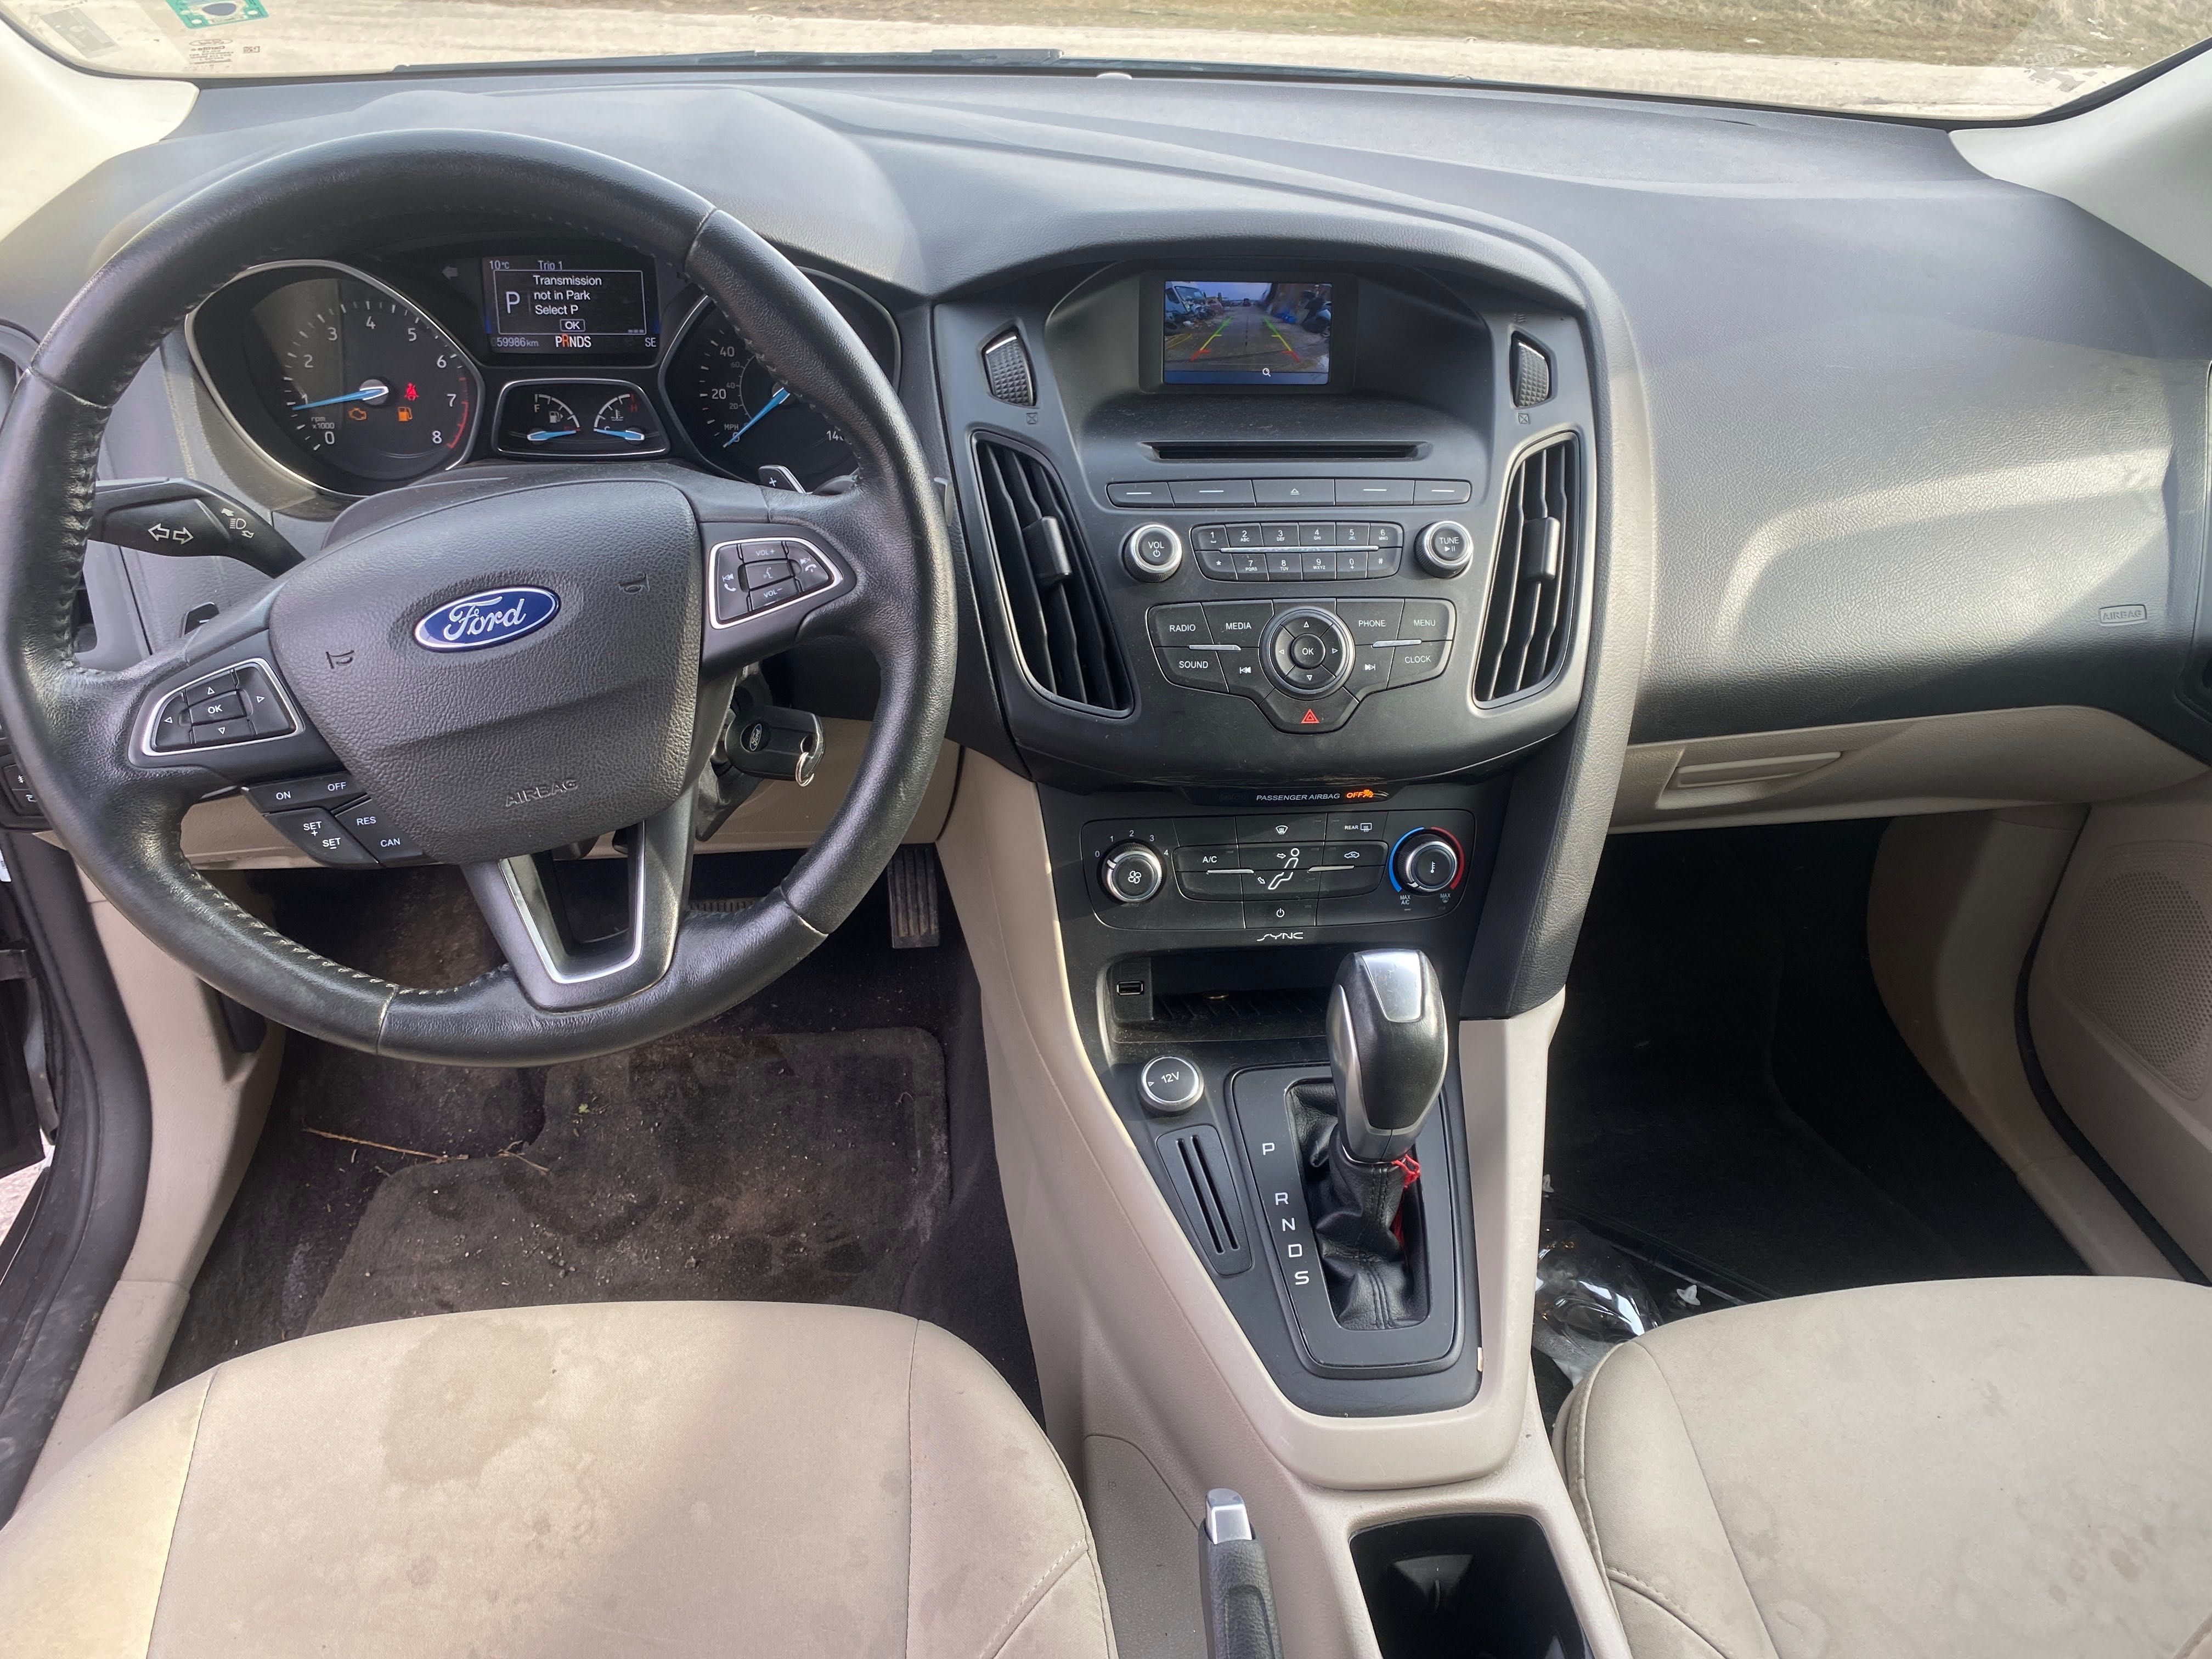 Ford Focus 2.0i auto, 162 ph., 2015, 60 000 km., engine FL